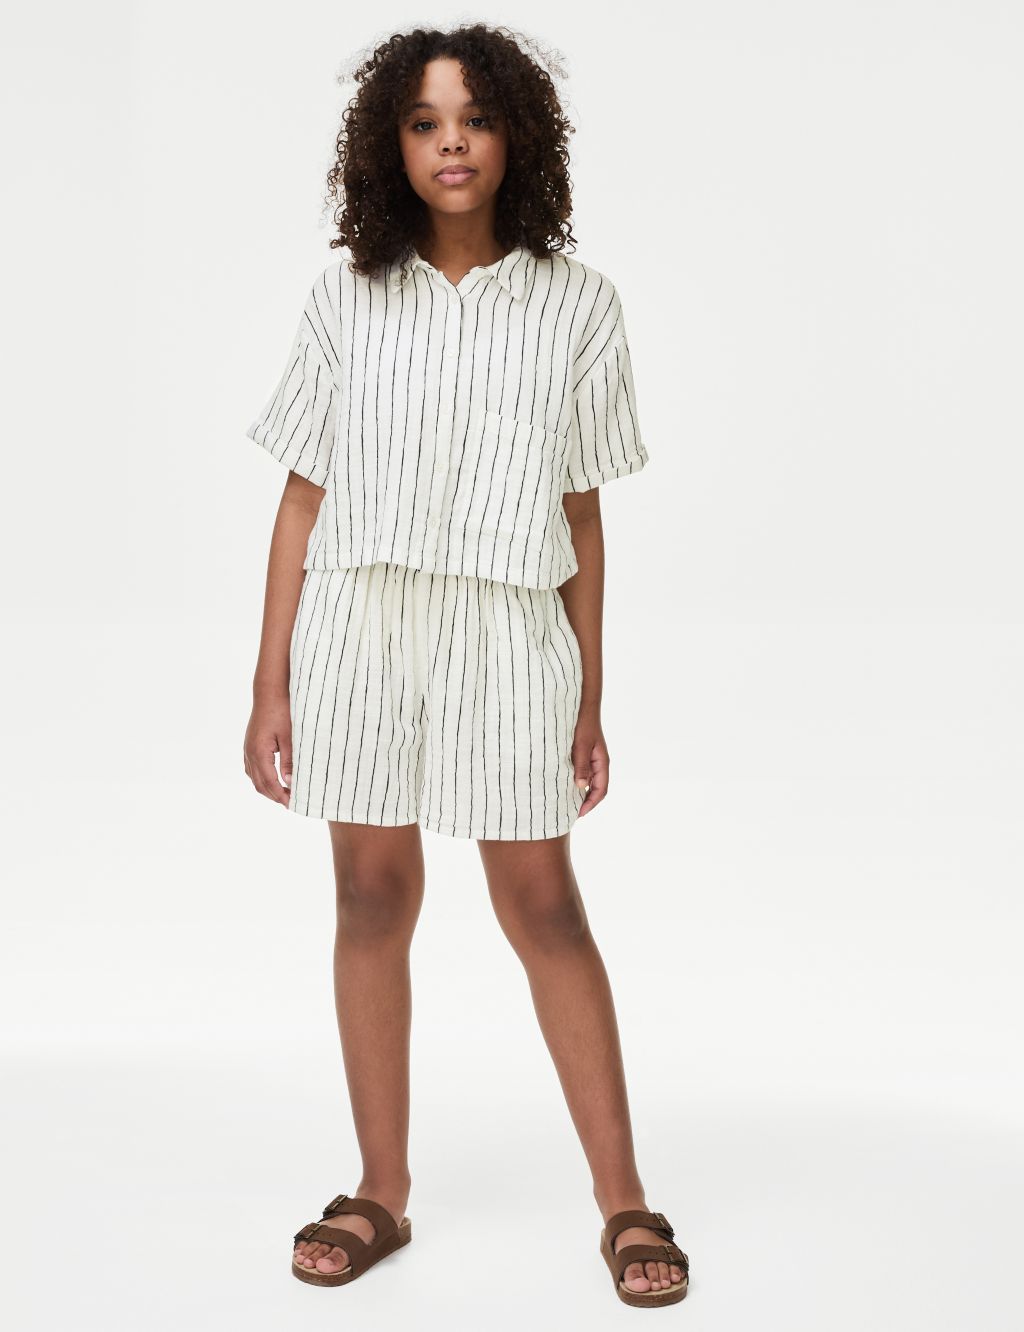 Pure Cotton Striped Shorts (6-16 Yrs)